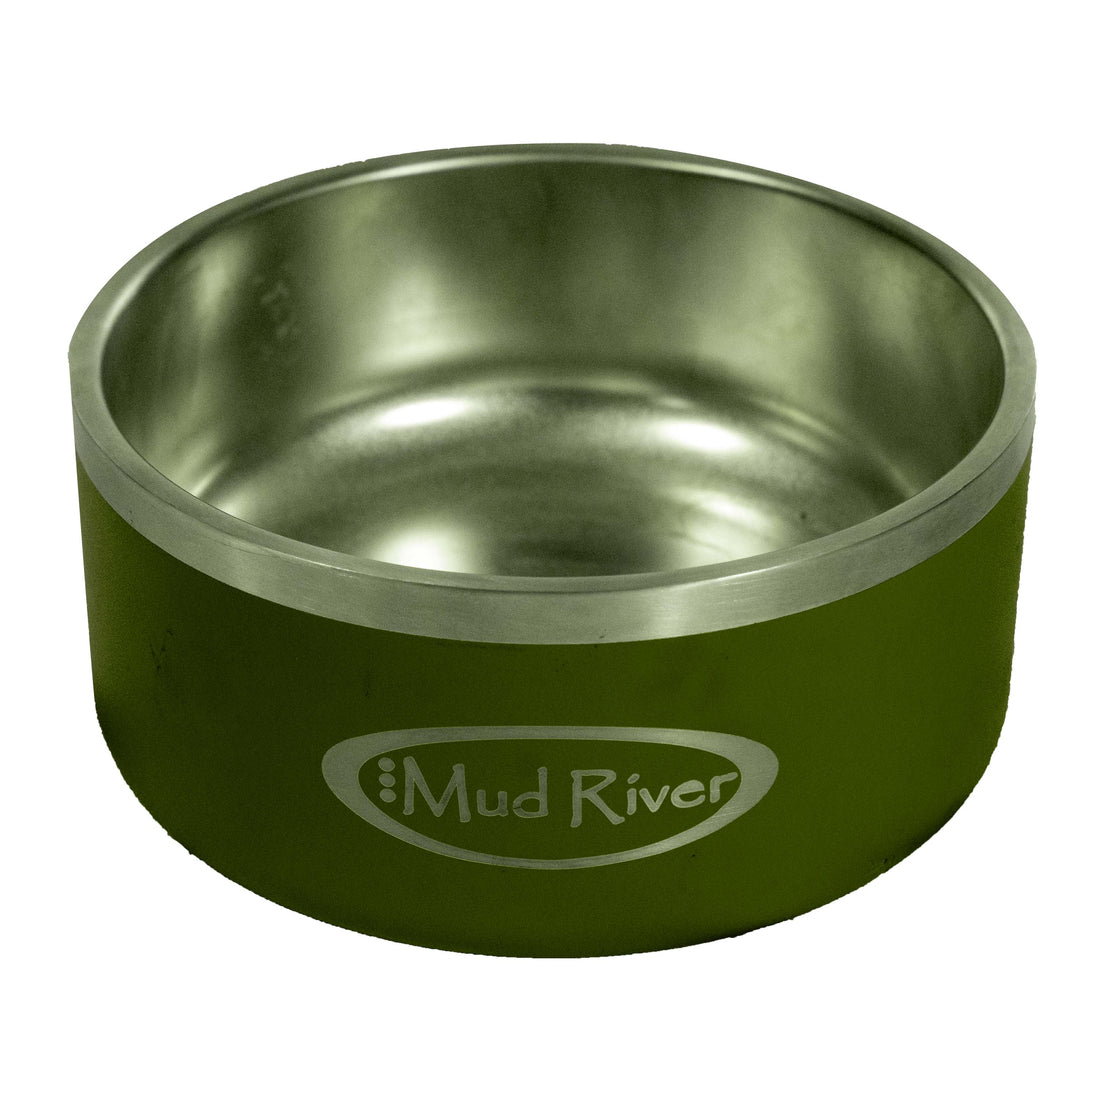 Boyt - Mud River Stainless Dog Bowl